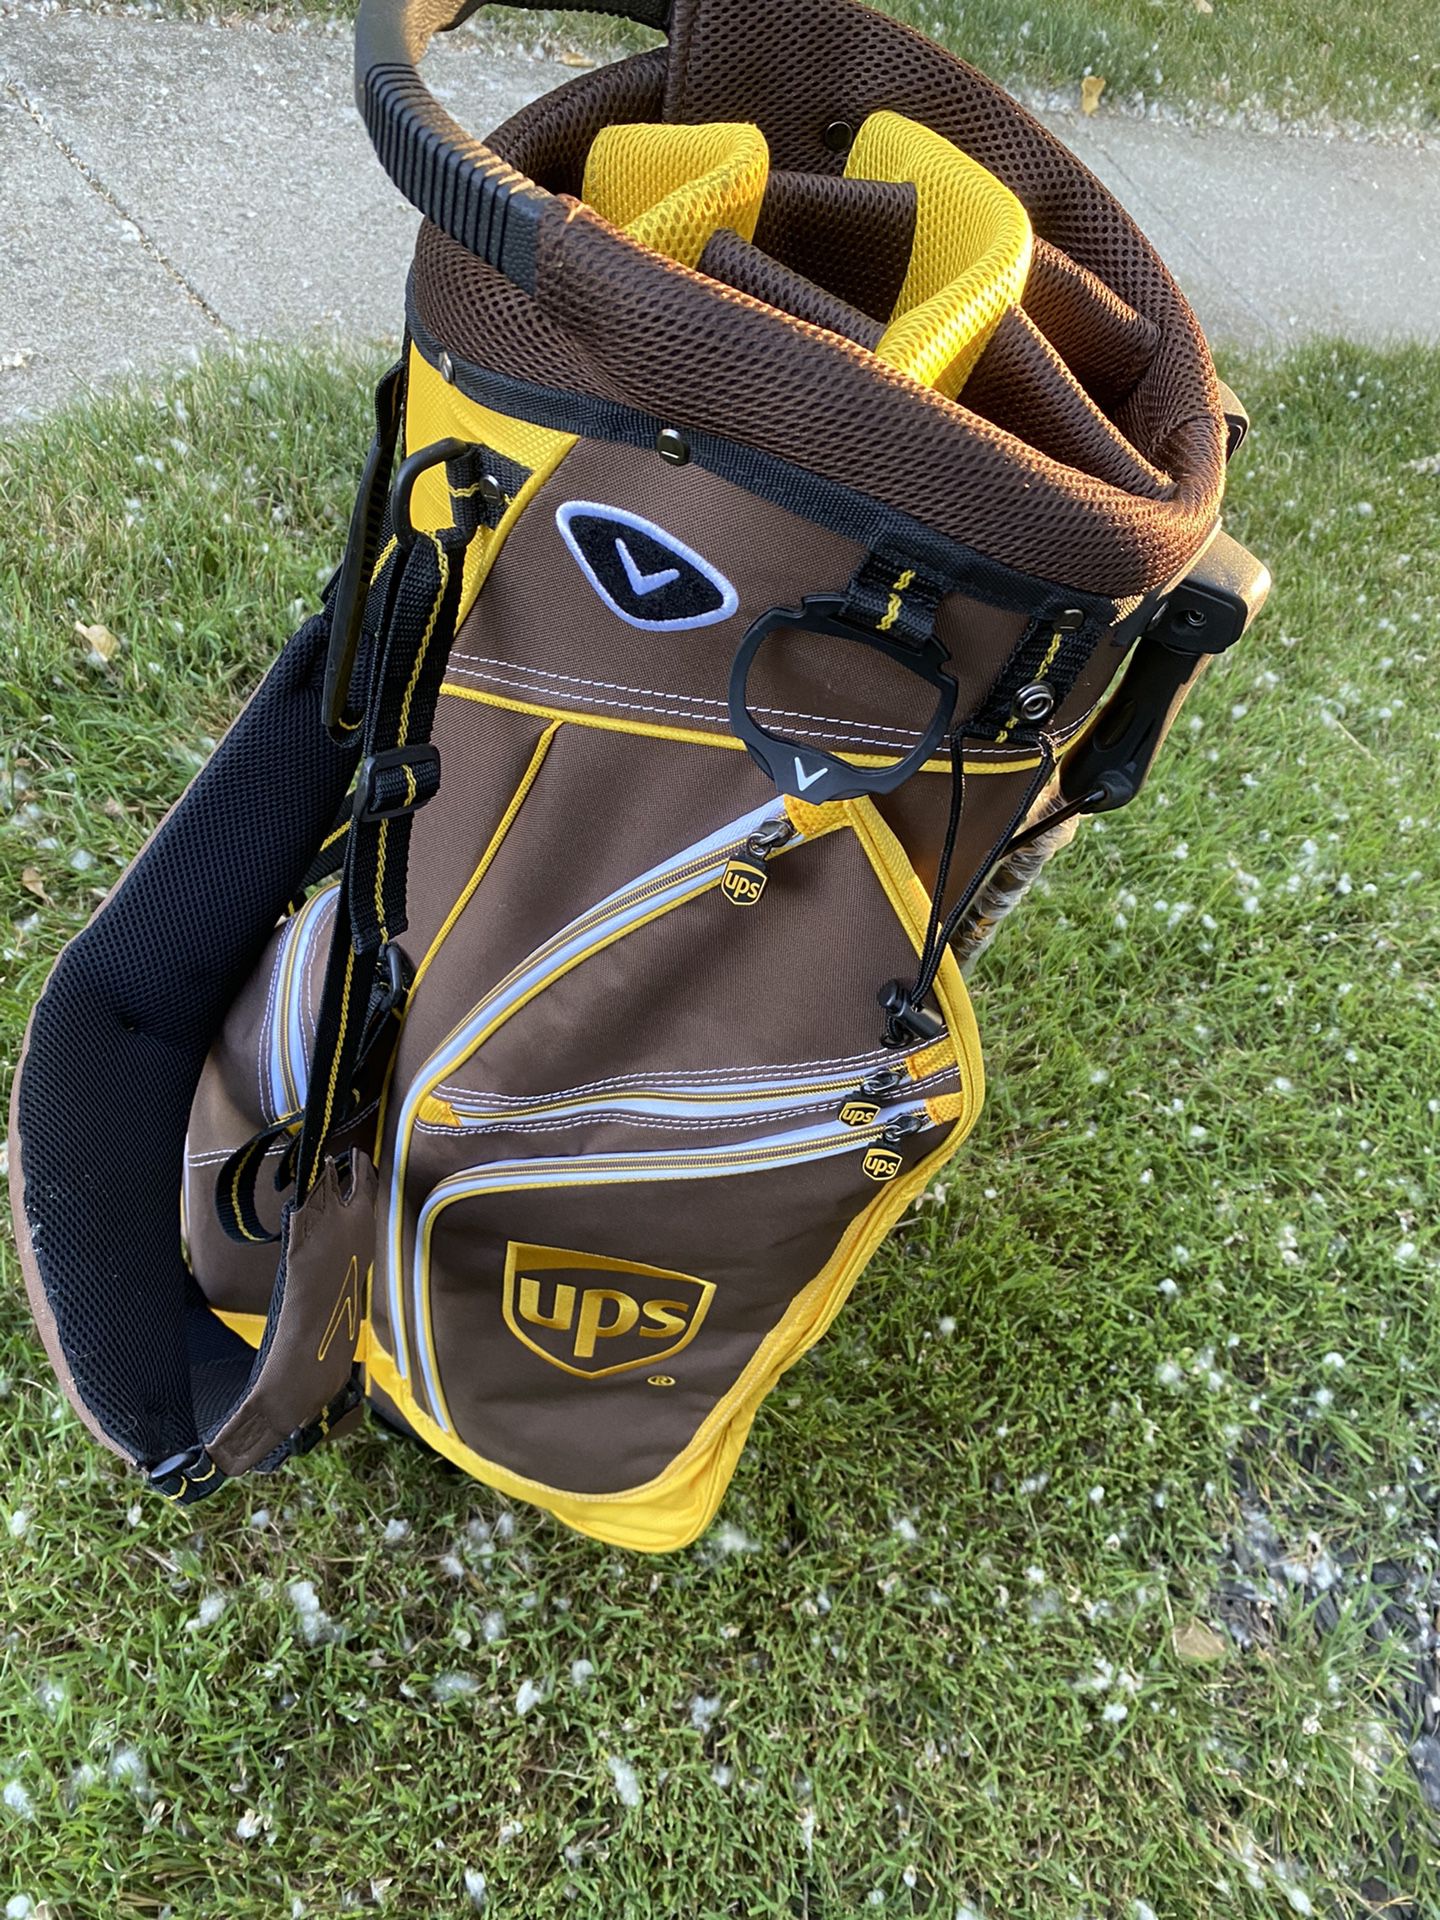 Limited addition Callaway Golf bag/backpack (UPS )